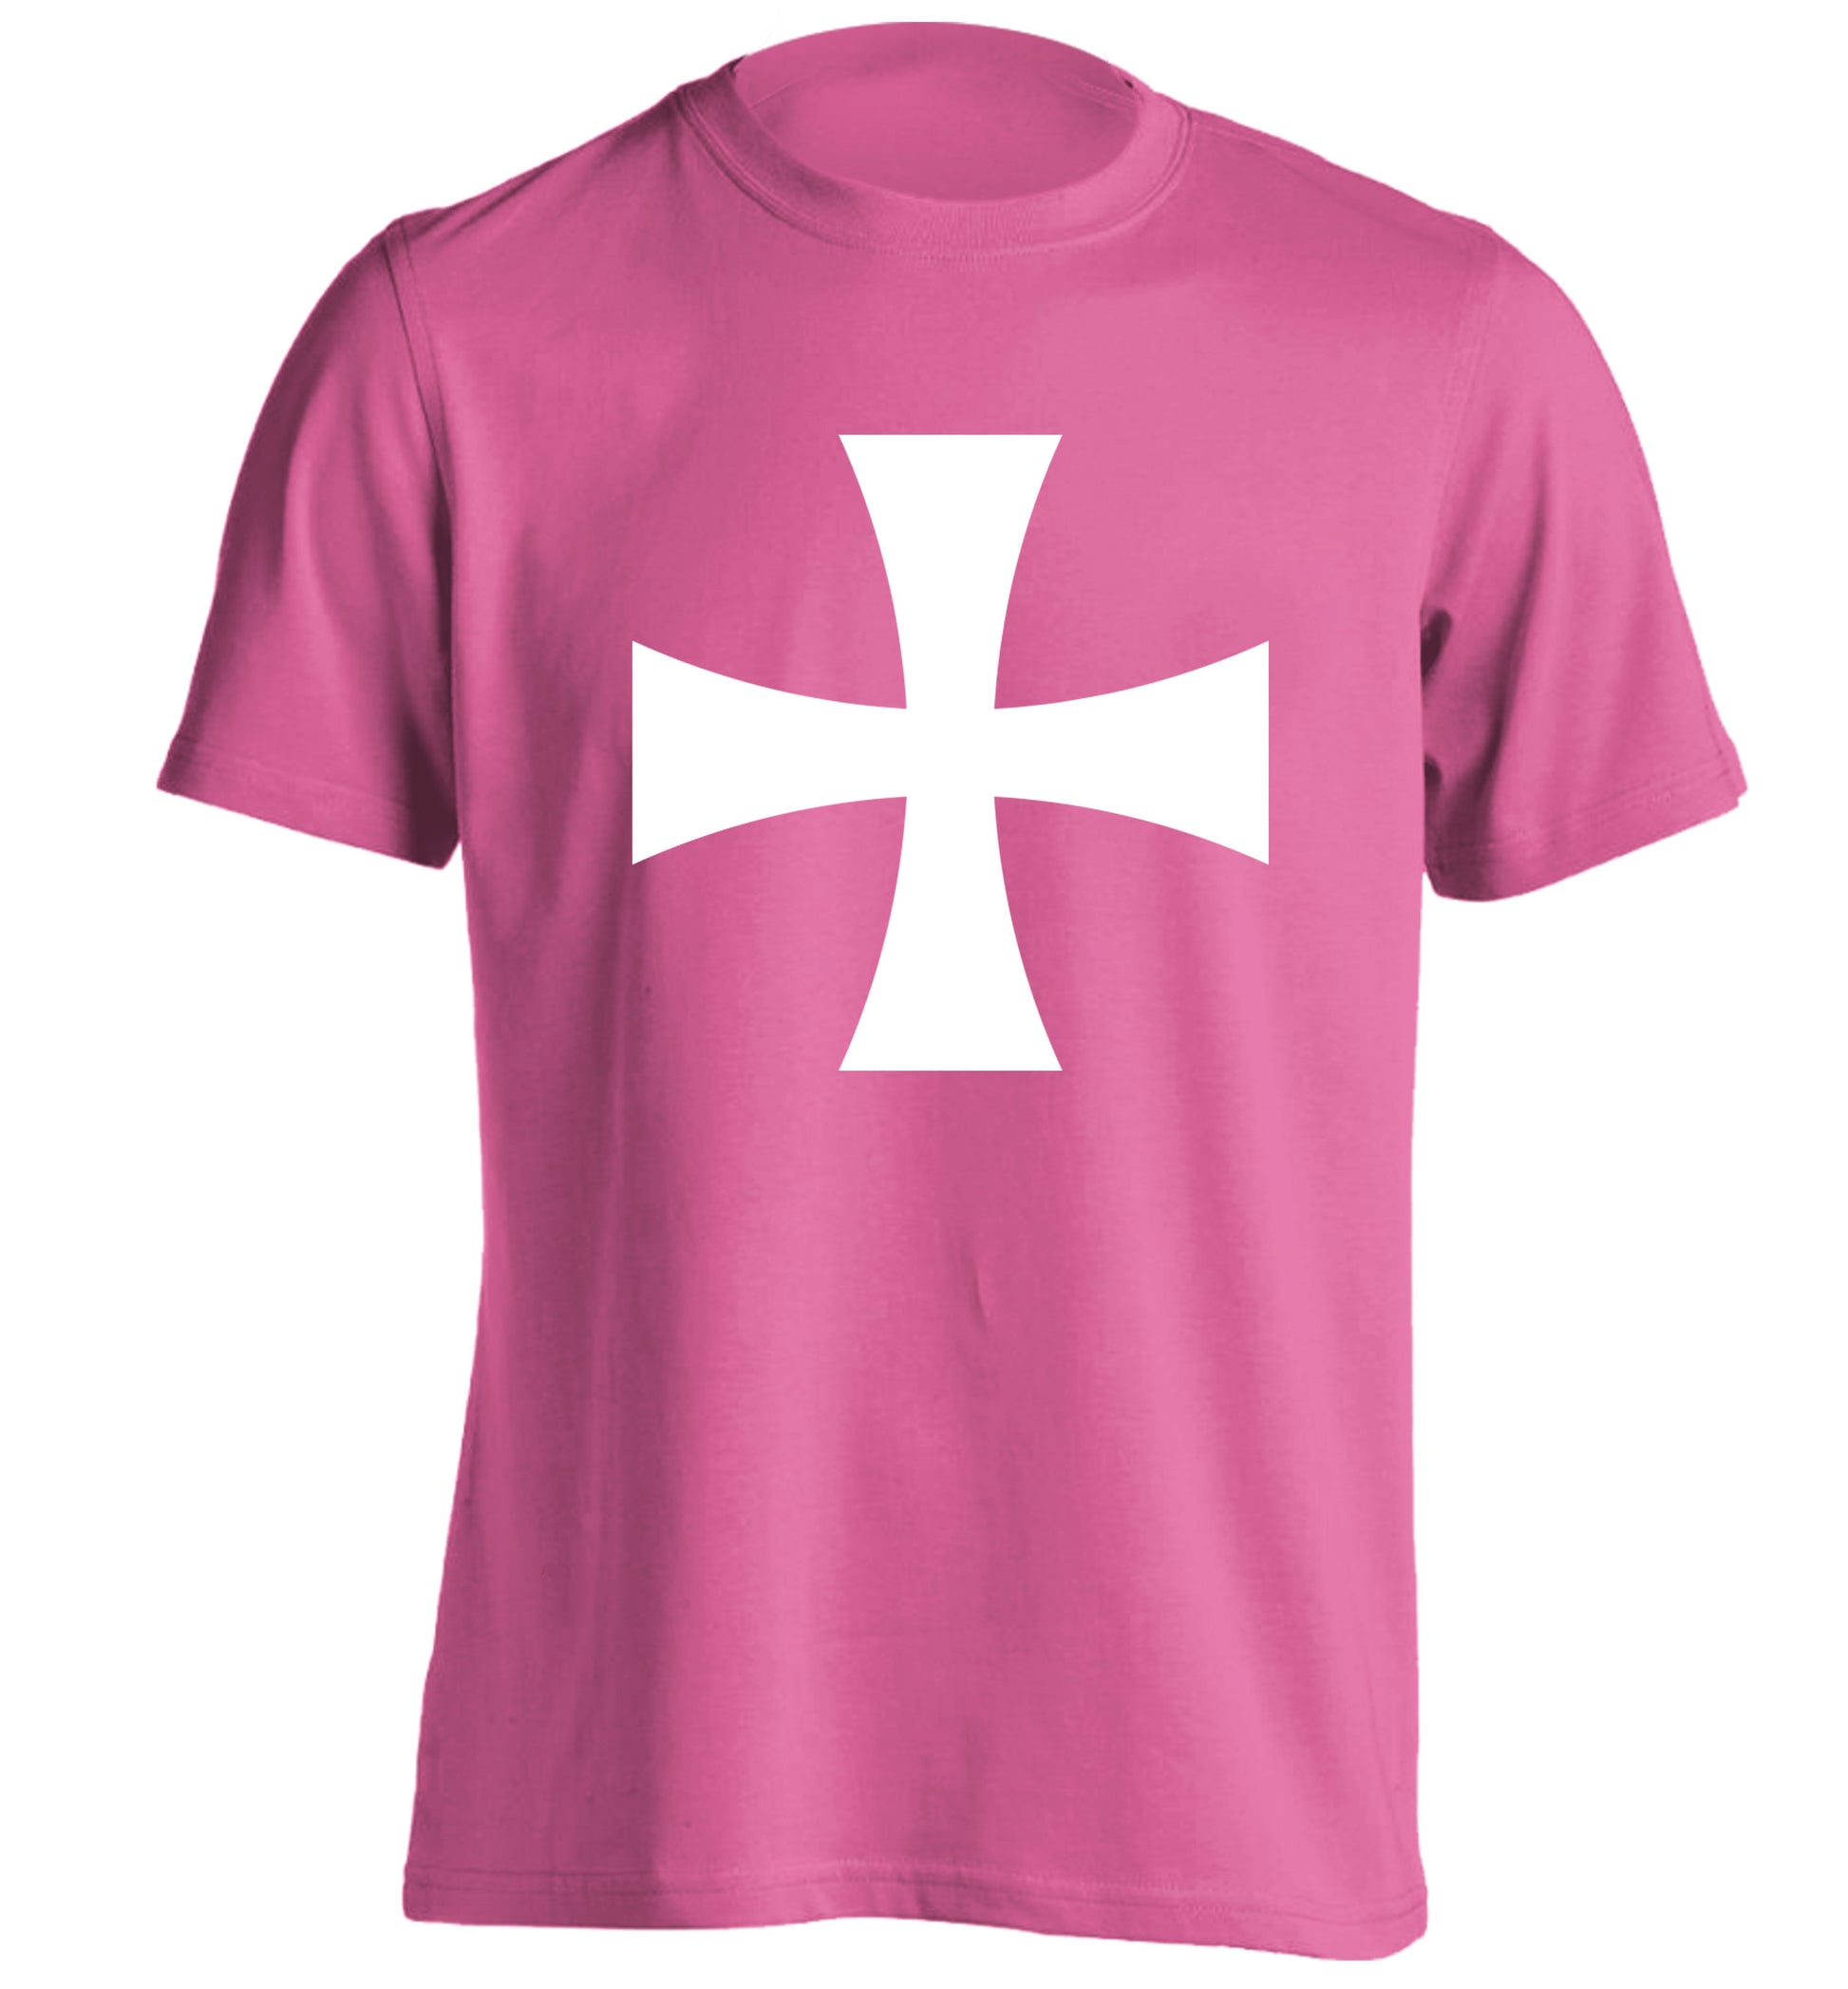 Knights Templar cross adults unisex pink Tshirt 2XL